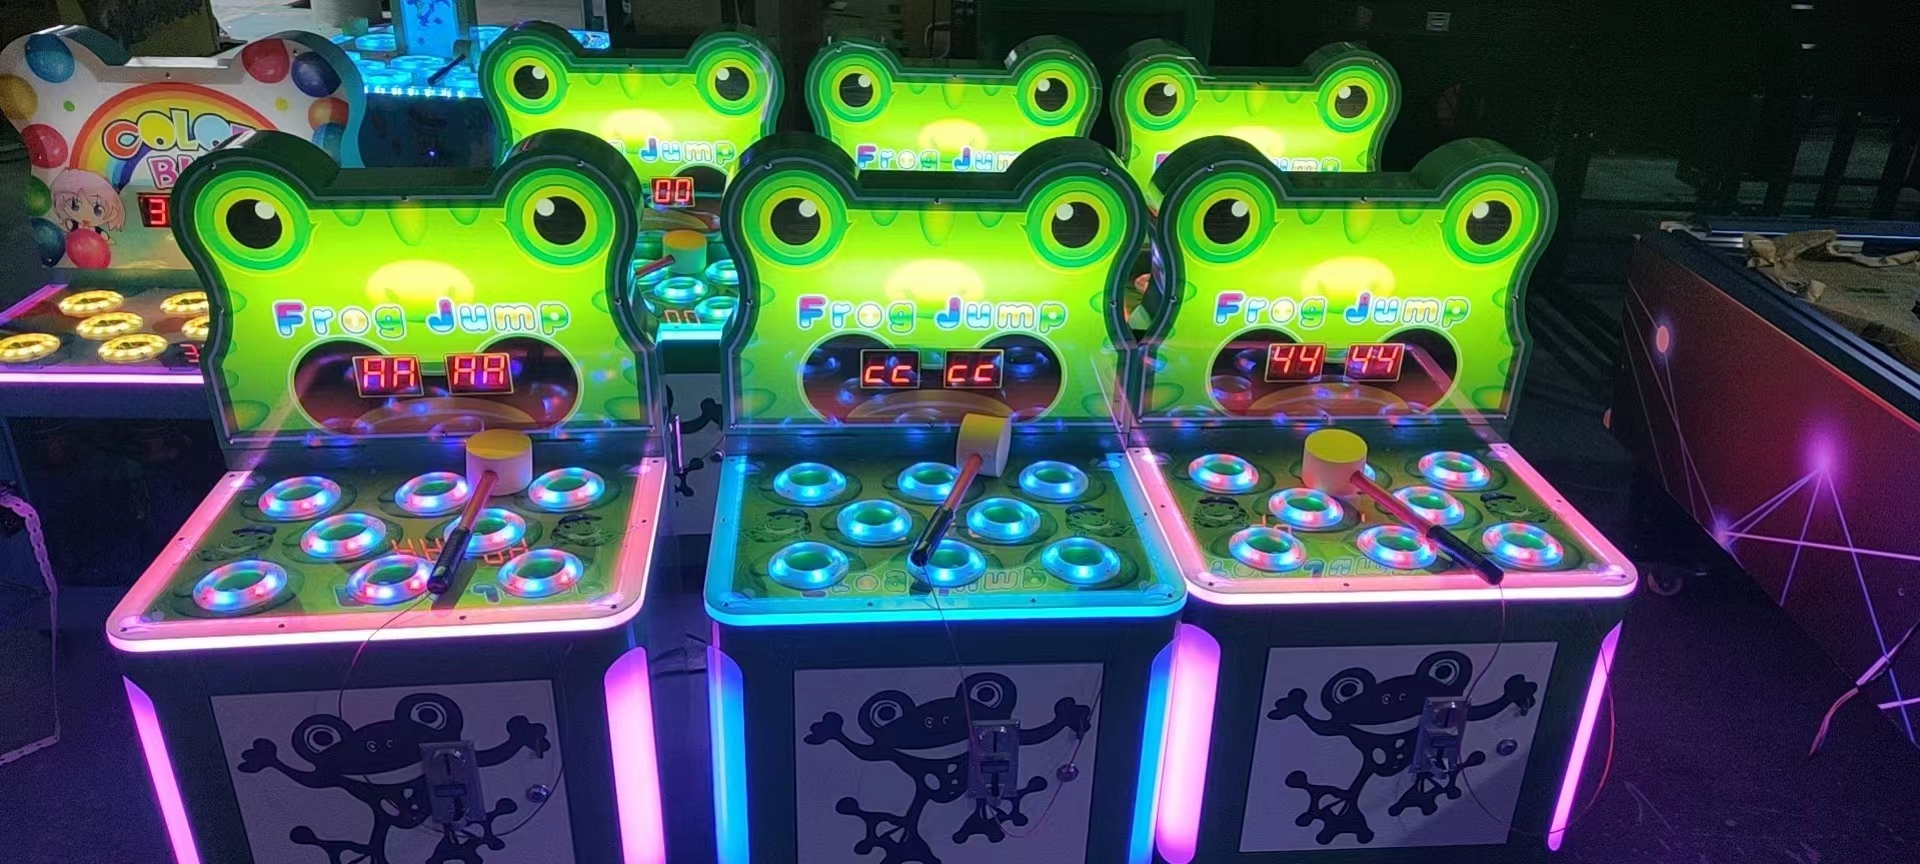 Kids-Whac-a-mole-Arcade-Sports-Game-Machine-Spongebob-Arcade-for-Kids-Tomy-Arcade (7)